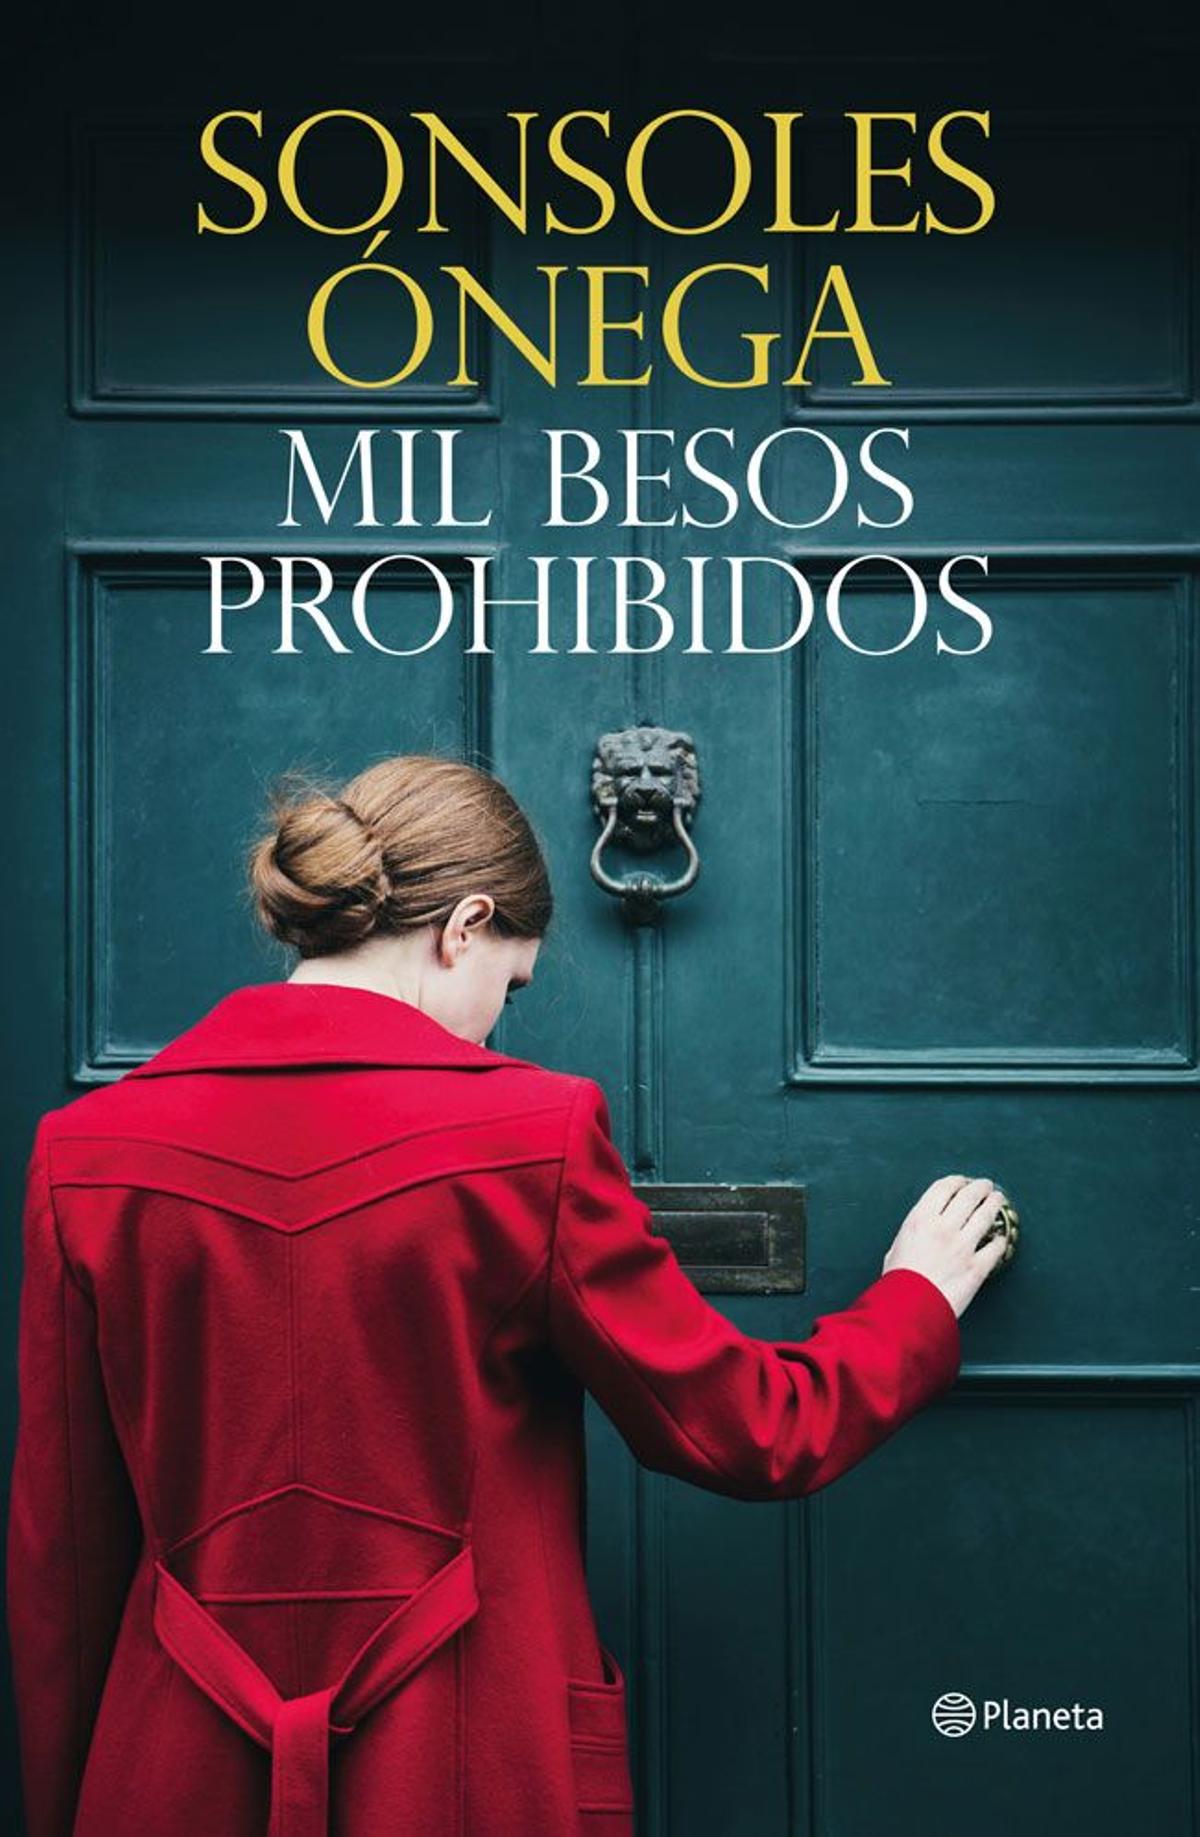 La nueva novela de Sonsoles Ónega: 'Mil besos prohibidos' (Planeta).